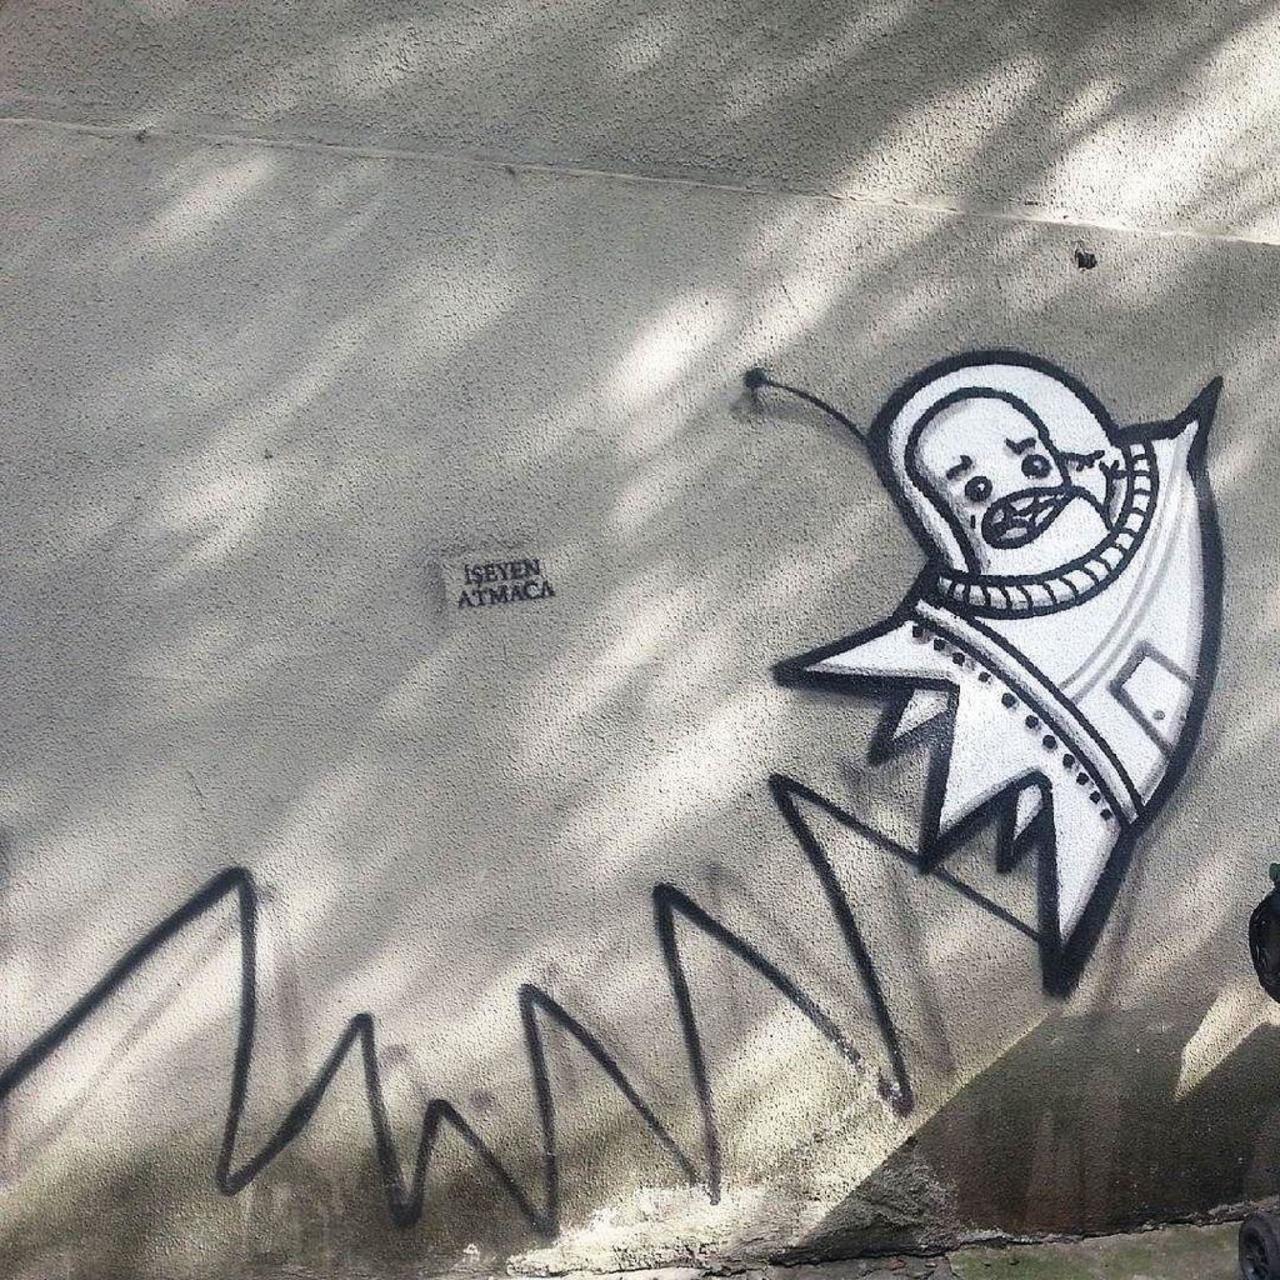 #streetartkadikoy #streetart #graffiti #publicart #urbanart #sokaksanatı #streetartistanbul #istanbulstreetart #gra… http://t.co/duKkV7Qubf